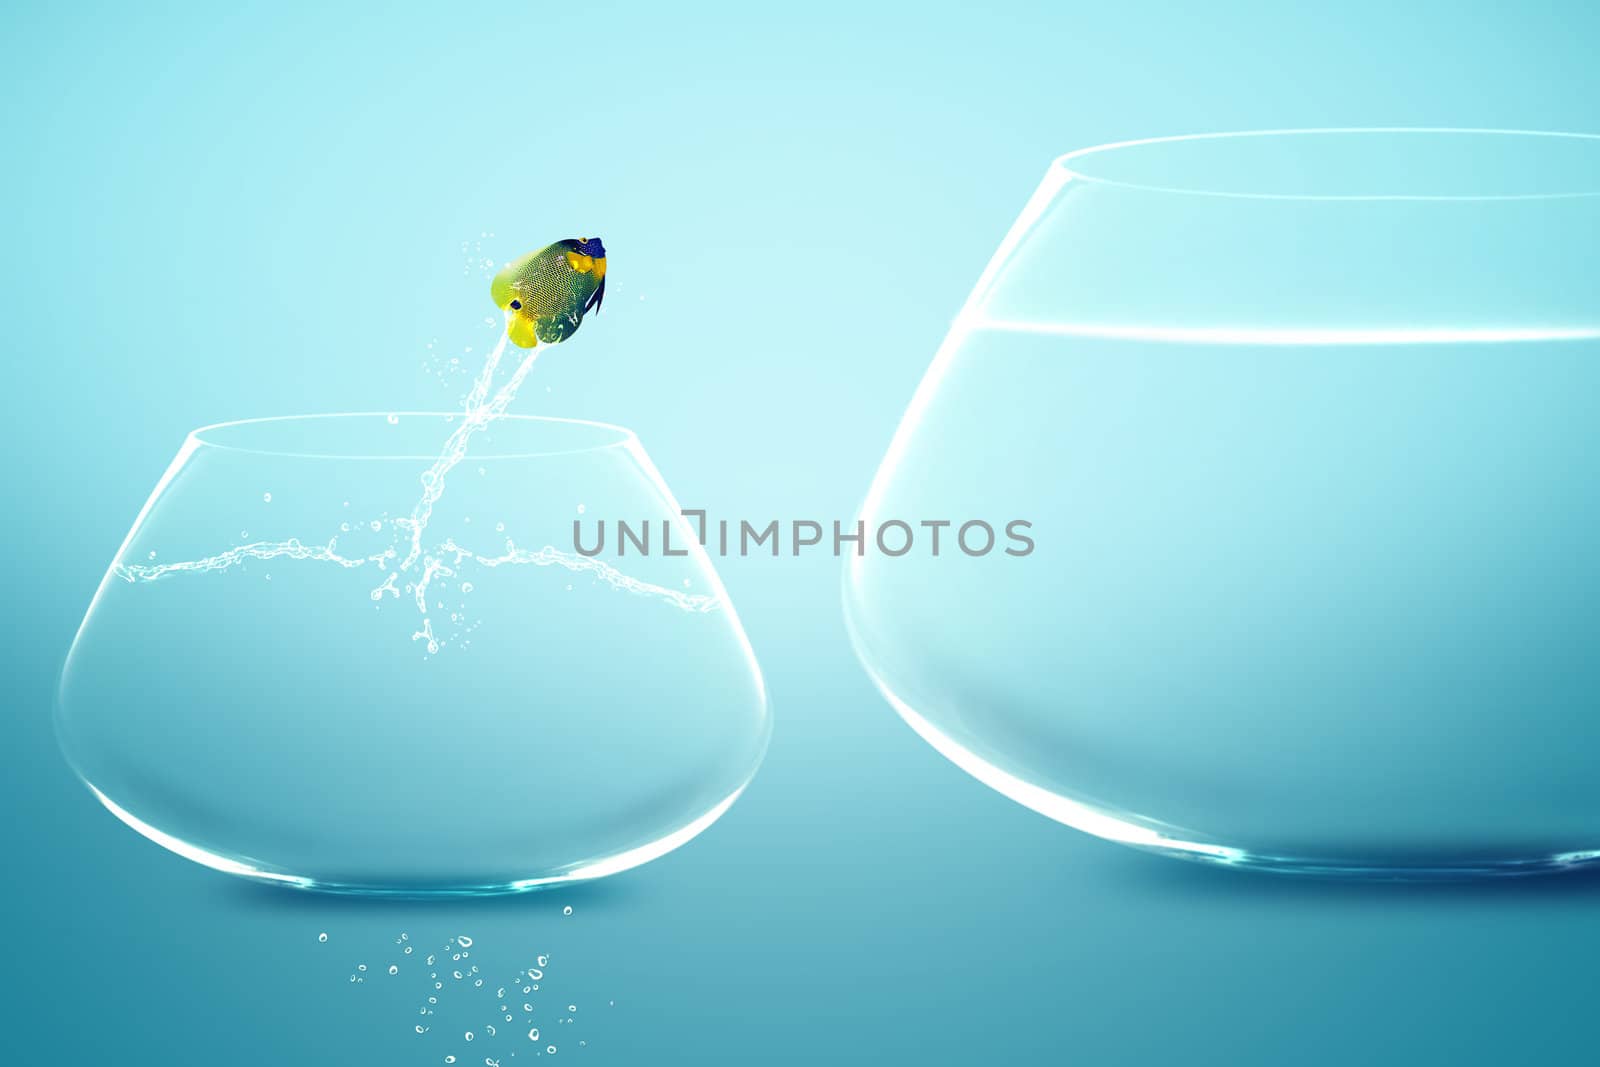 Anglefish jumping into bigger fishbowl by designsstock